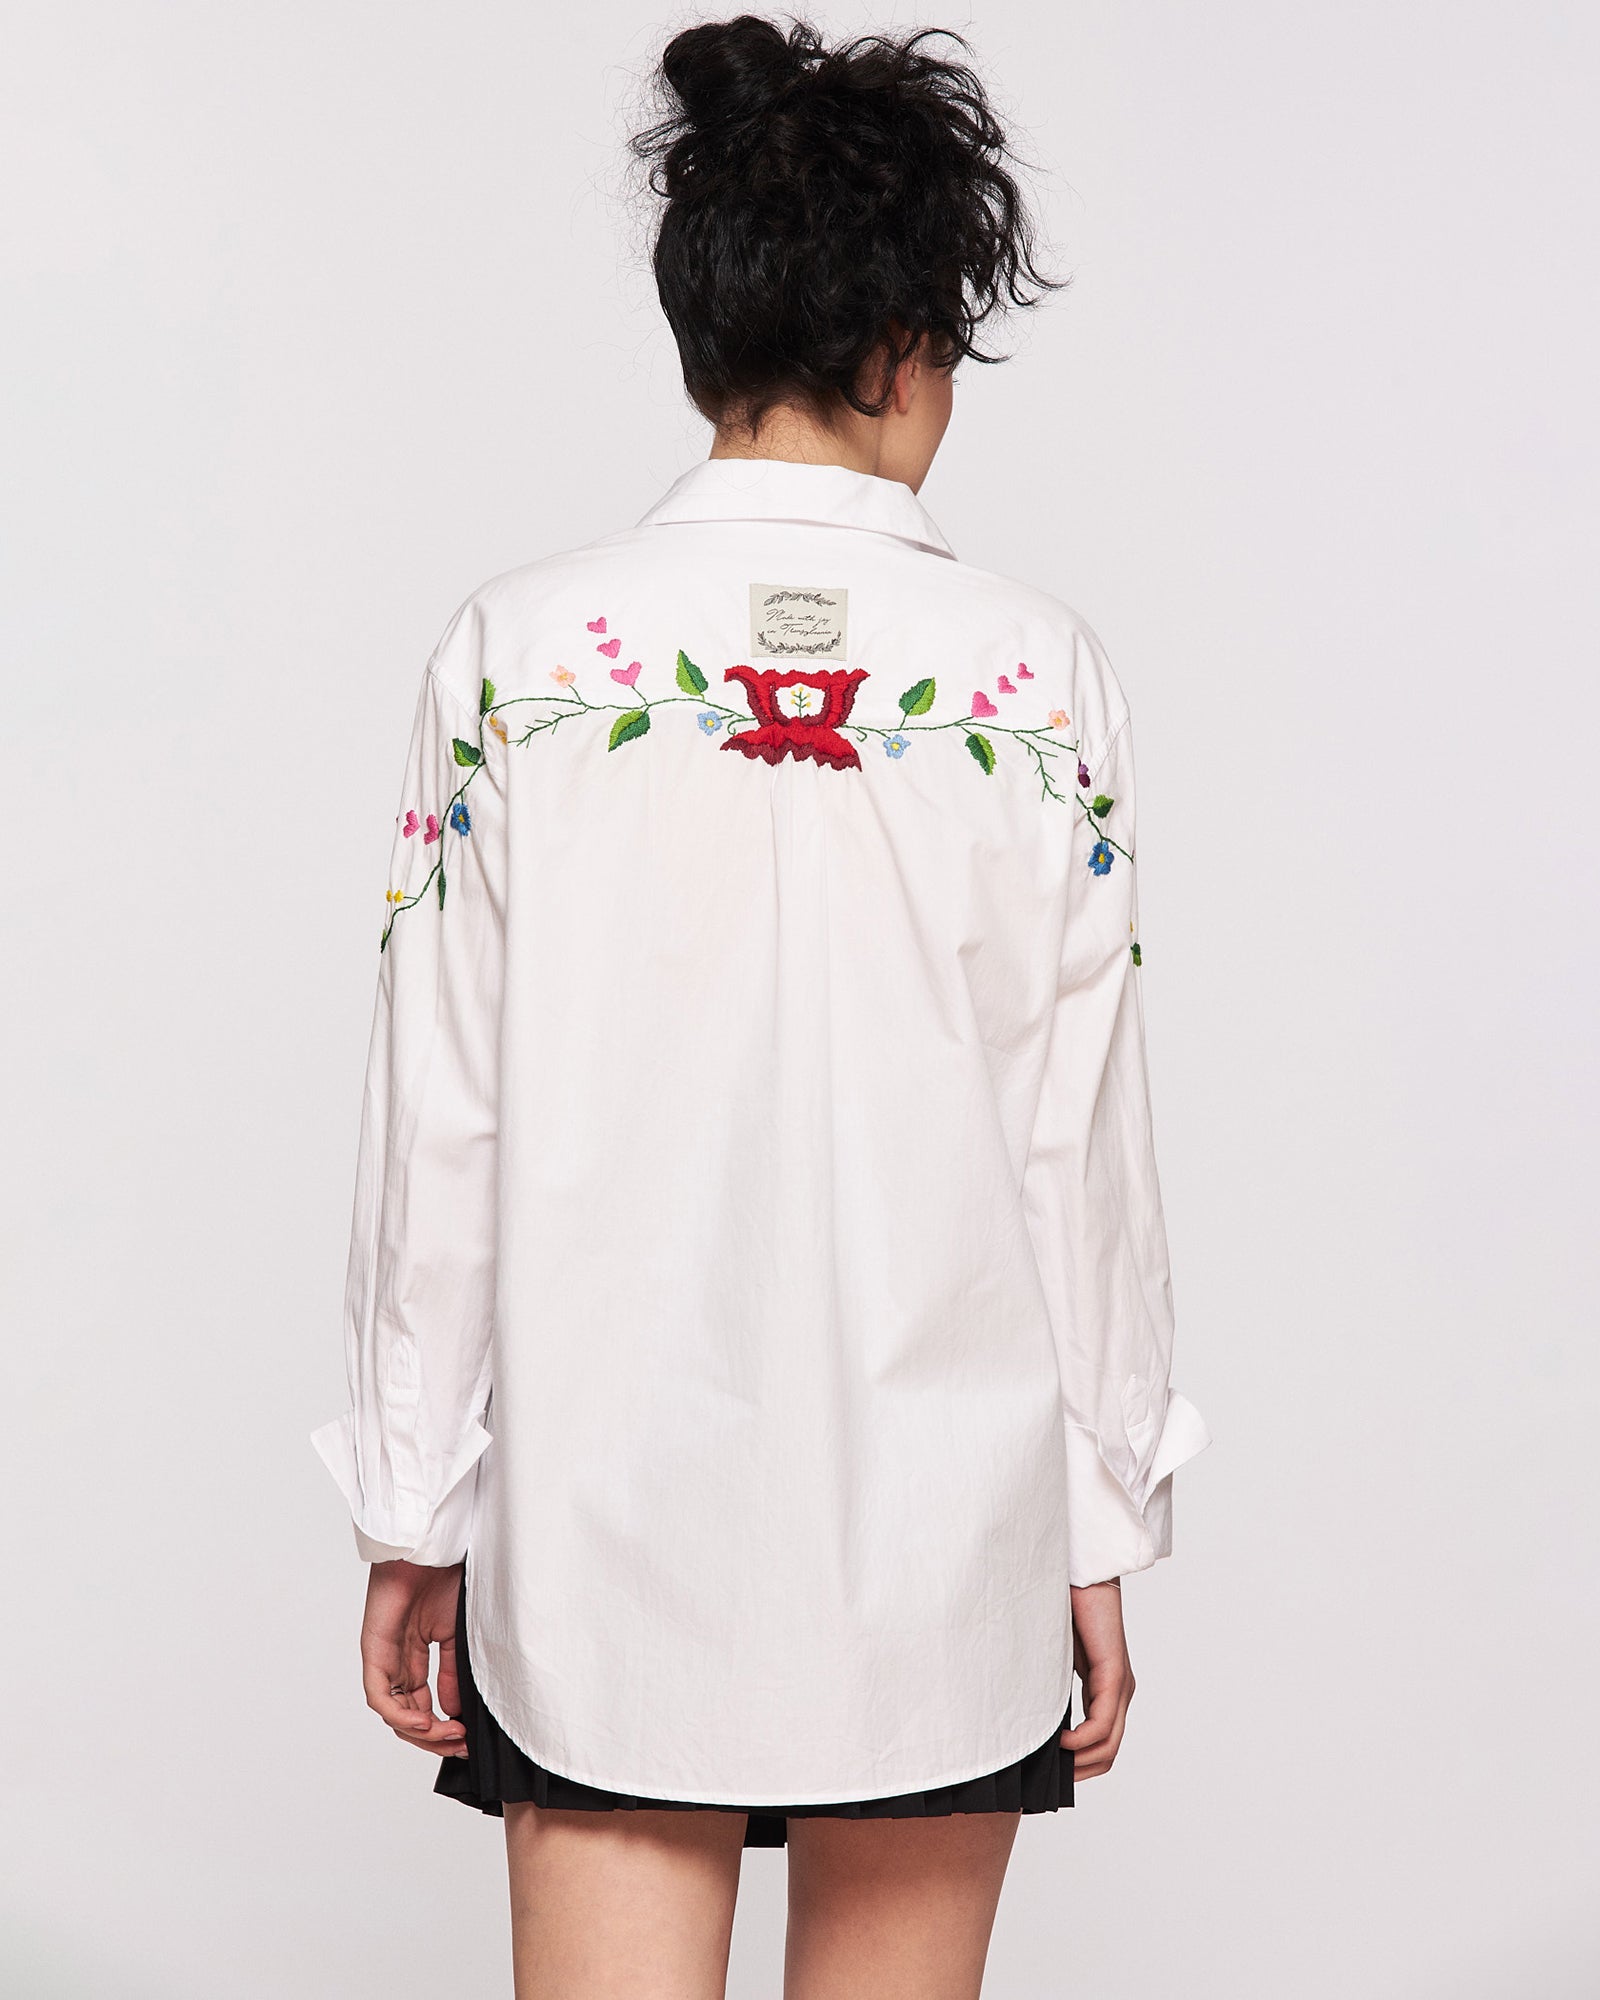 Hand-embroidered women's shirt "Wild flowers"